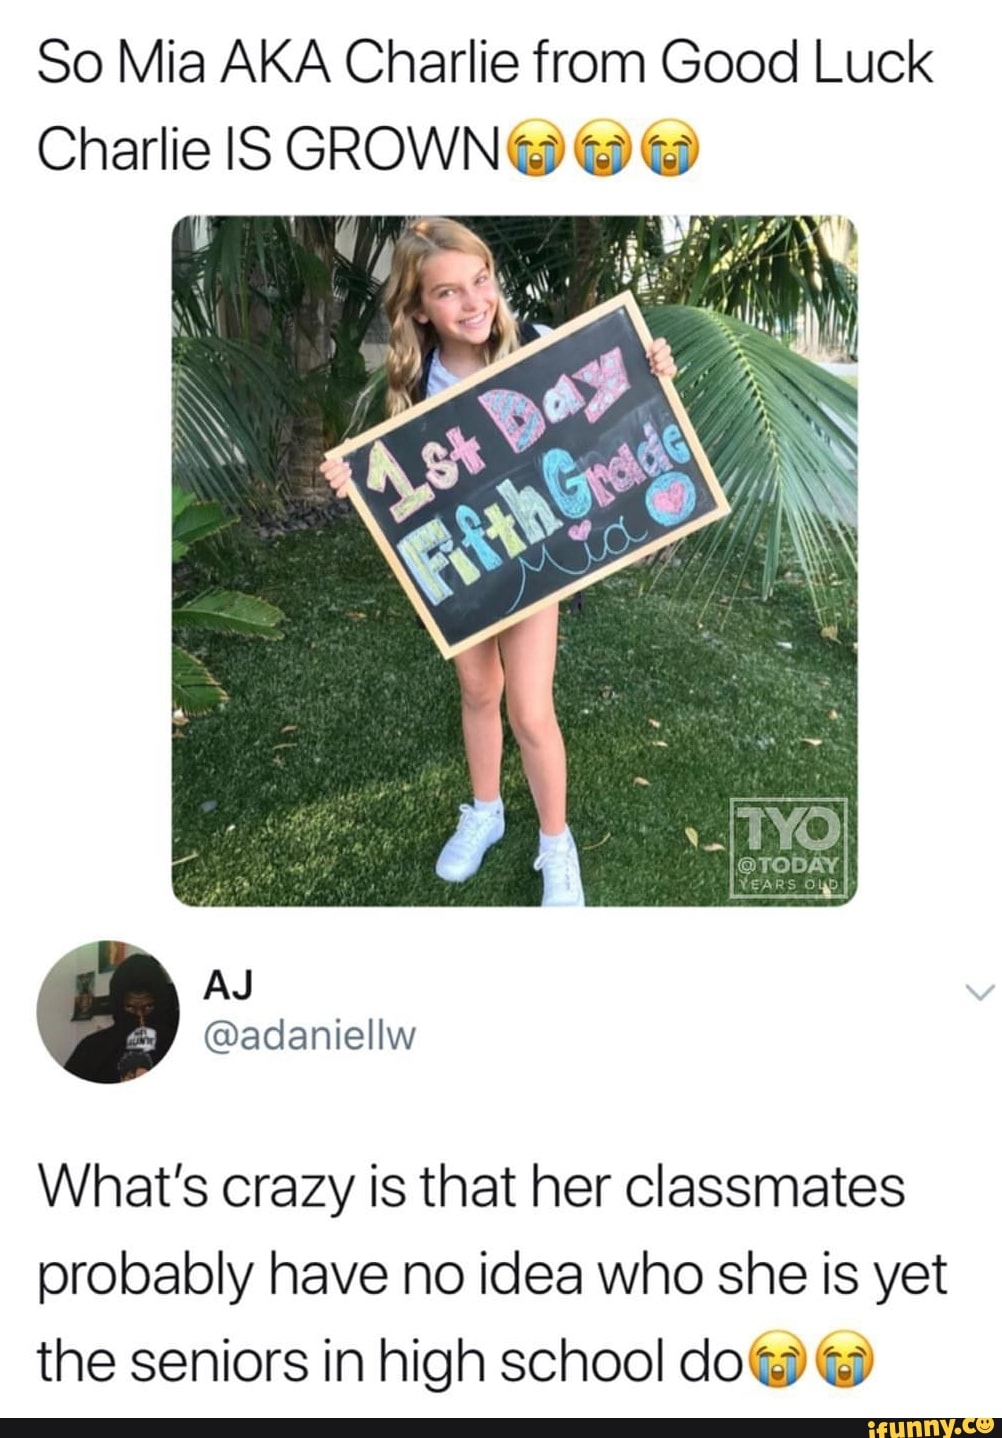 Good Luck Charlie' child star of viral meme fame begins high school